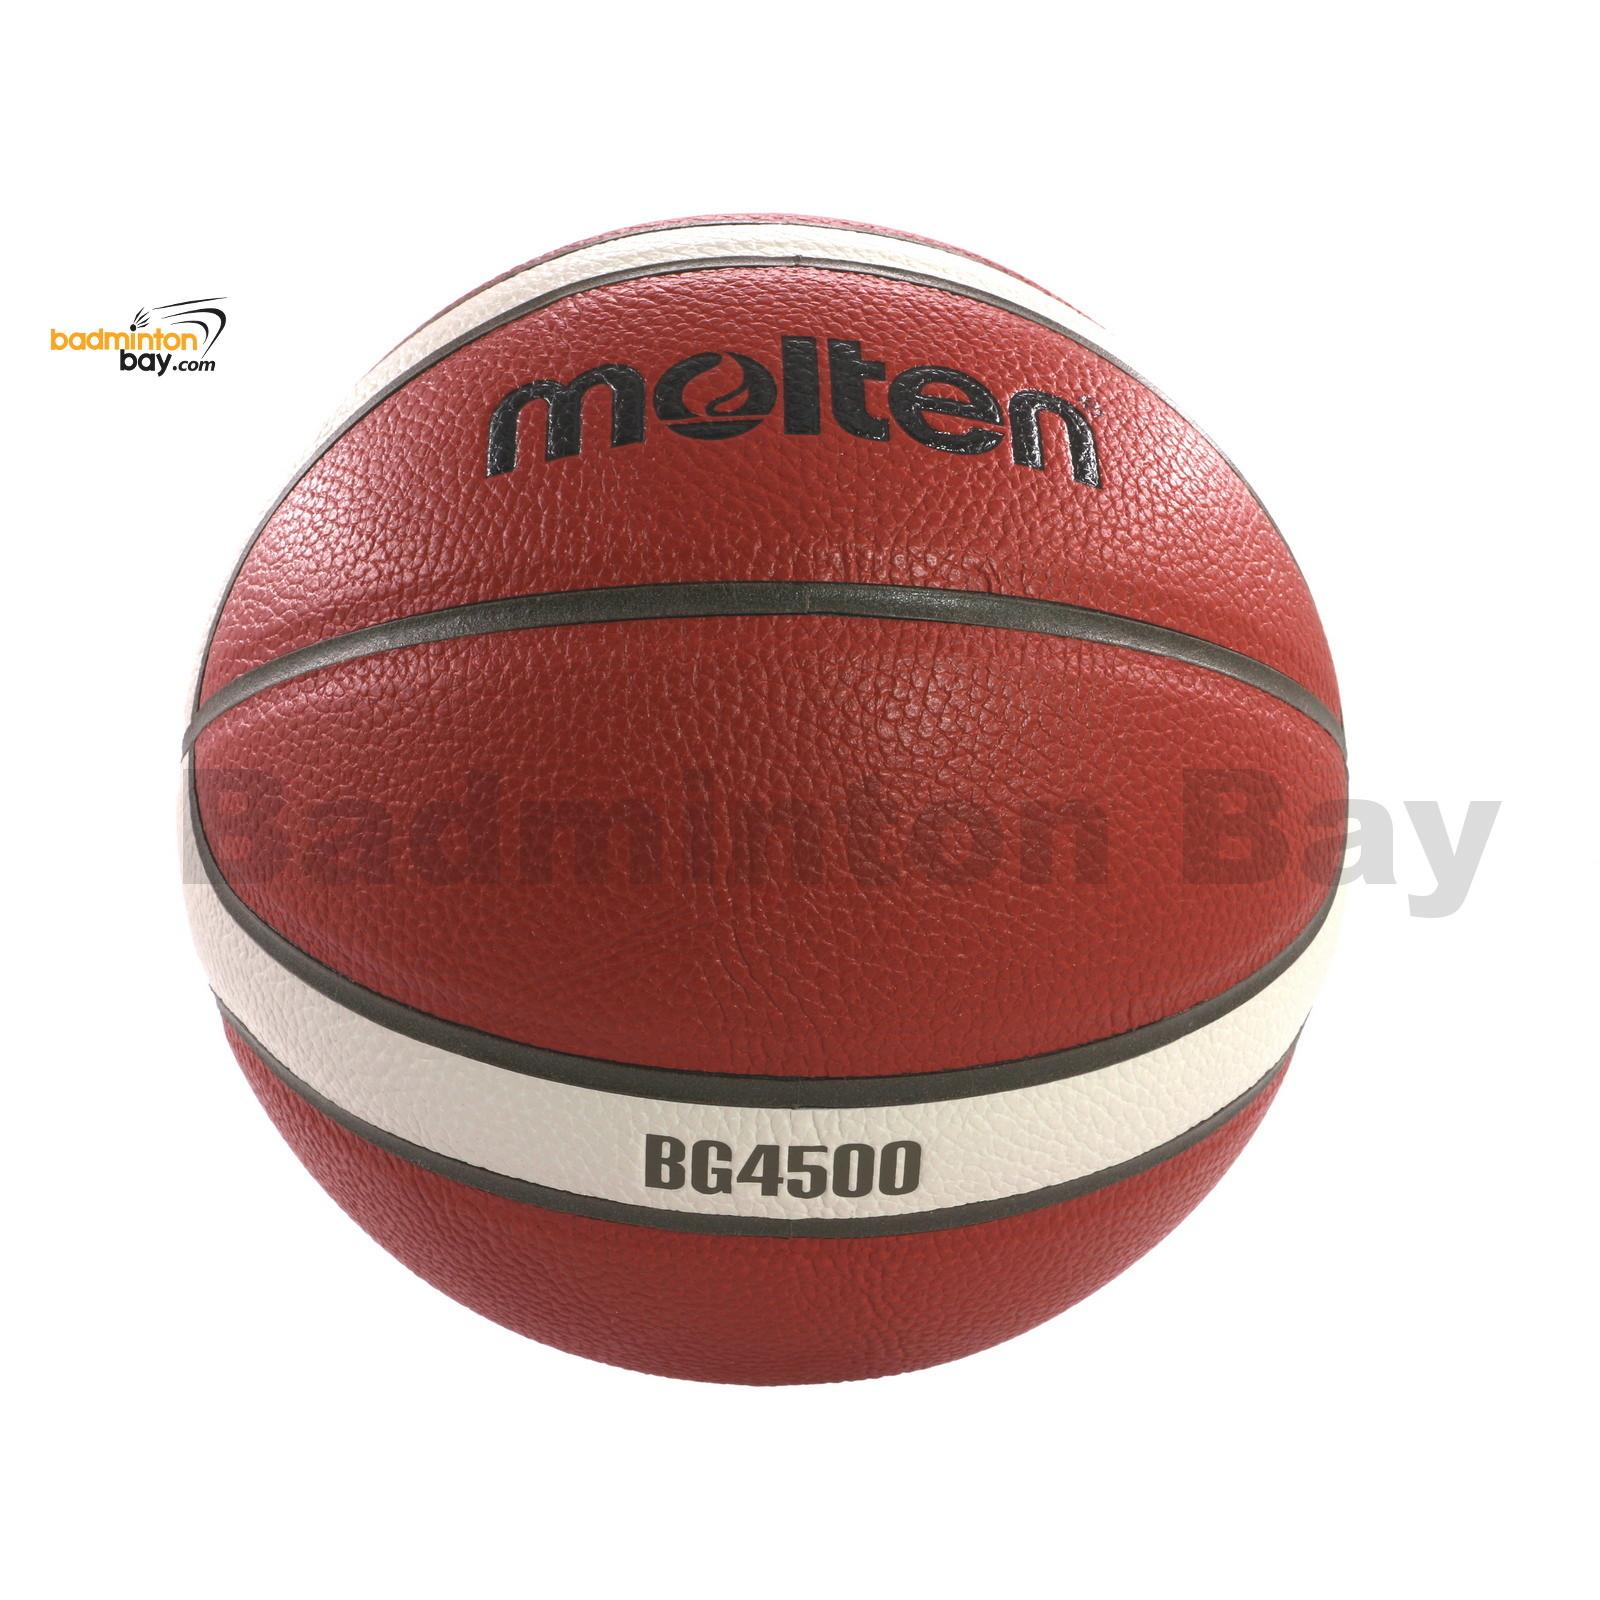 Molten Basketball BG4500 FIBA Approved Composite Leather Basketball 